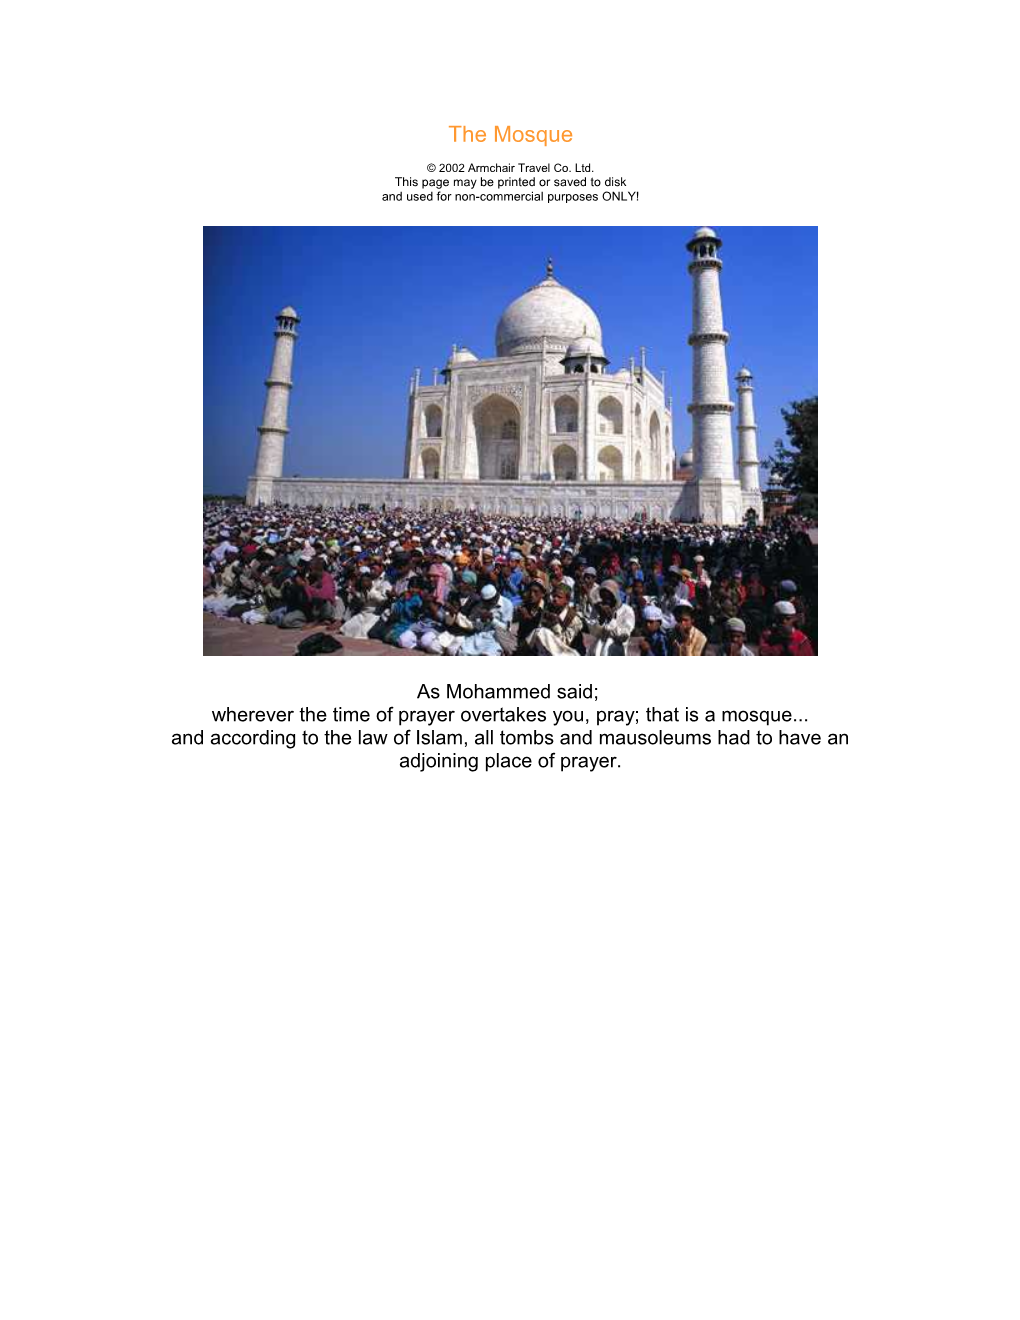 The Mosque 2002 Armchair Travel Co. Ltd